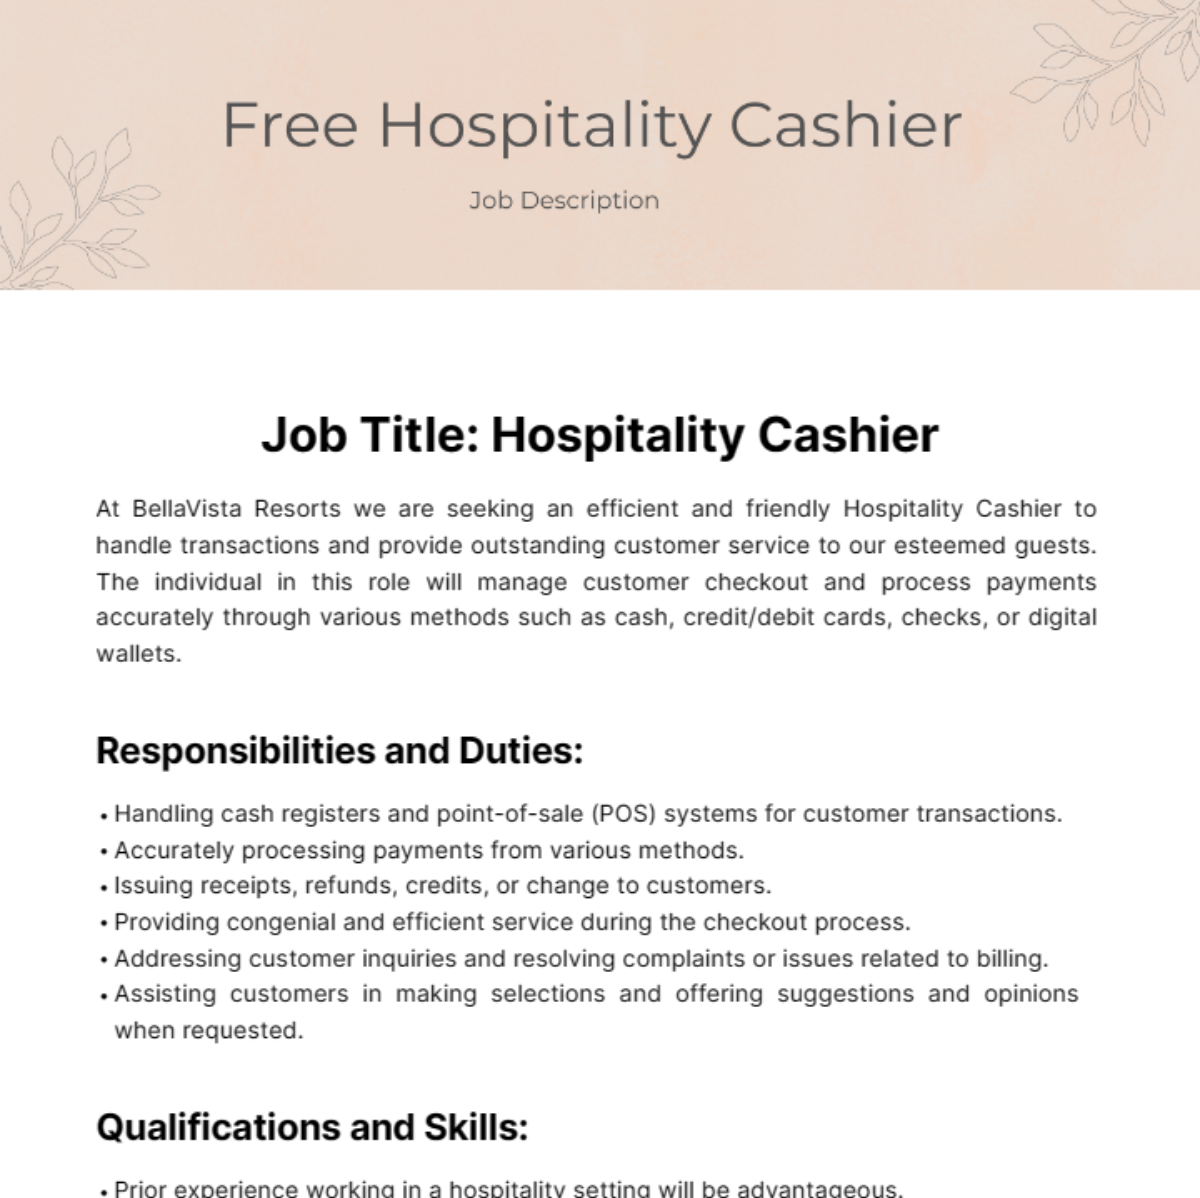 Free Hospitality Cashier Job Description Template